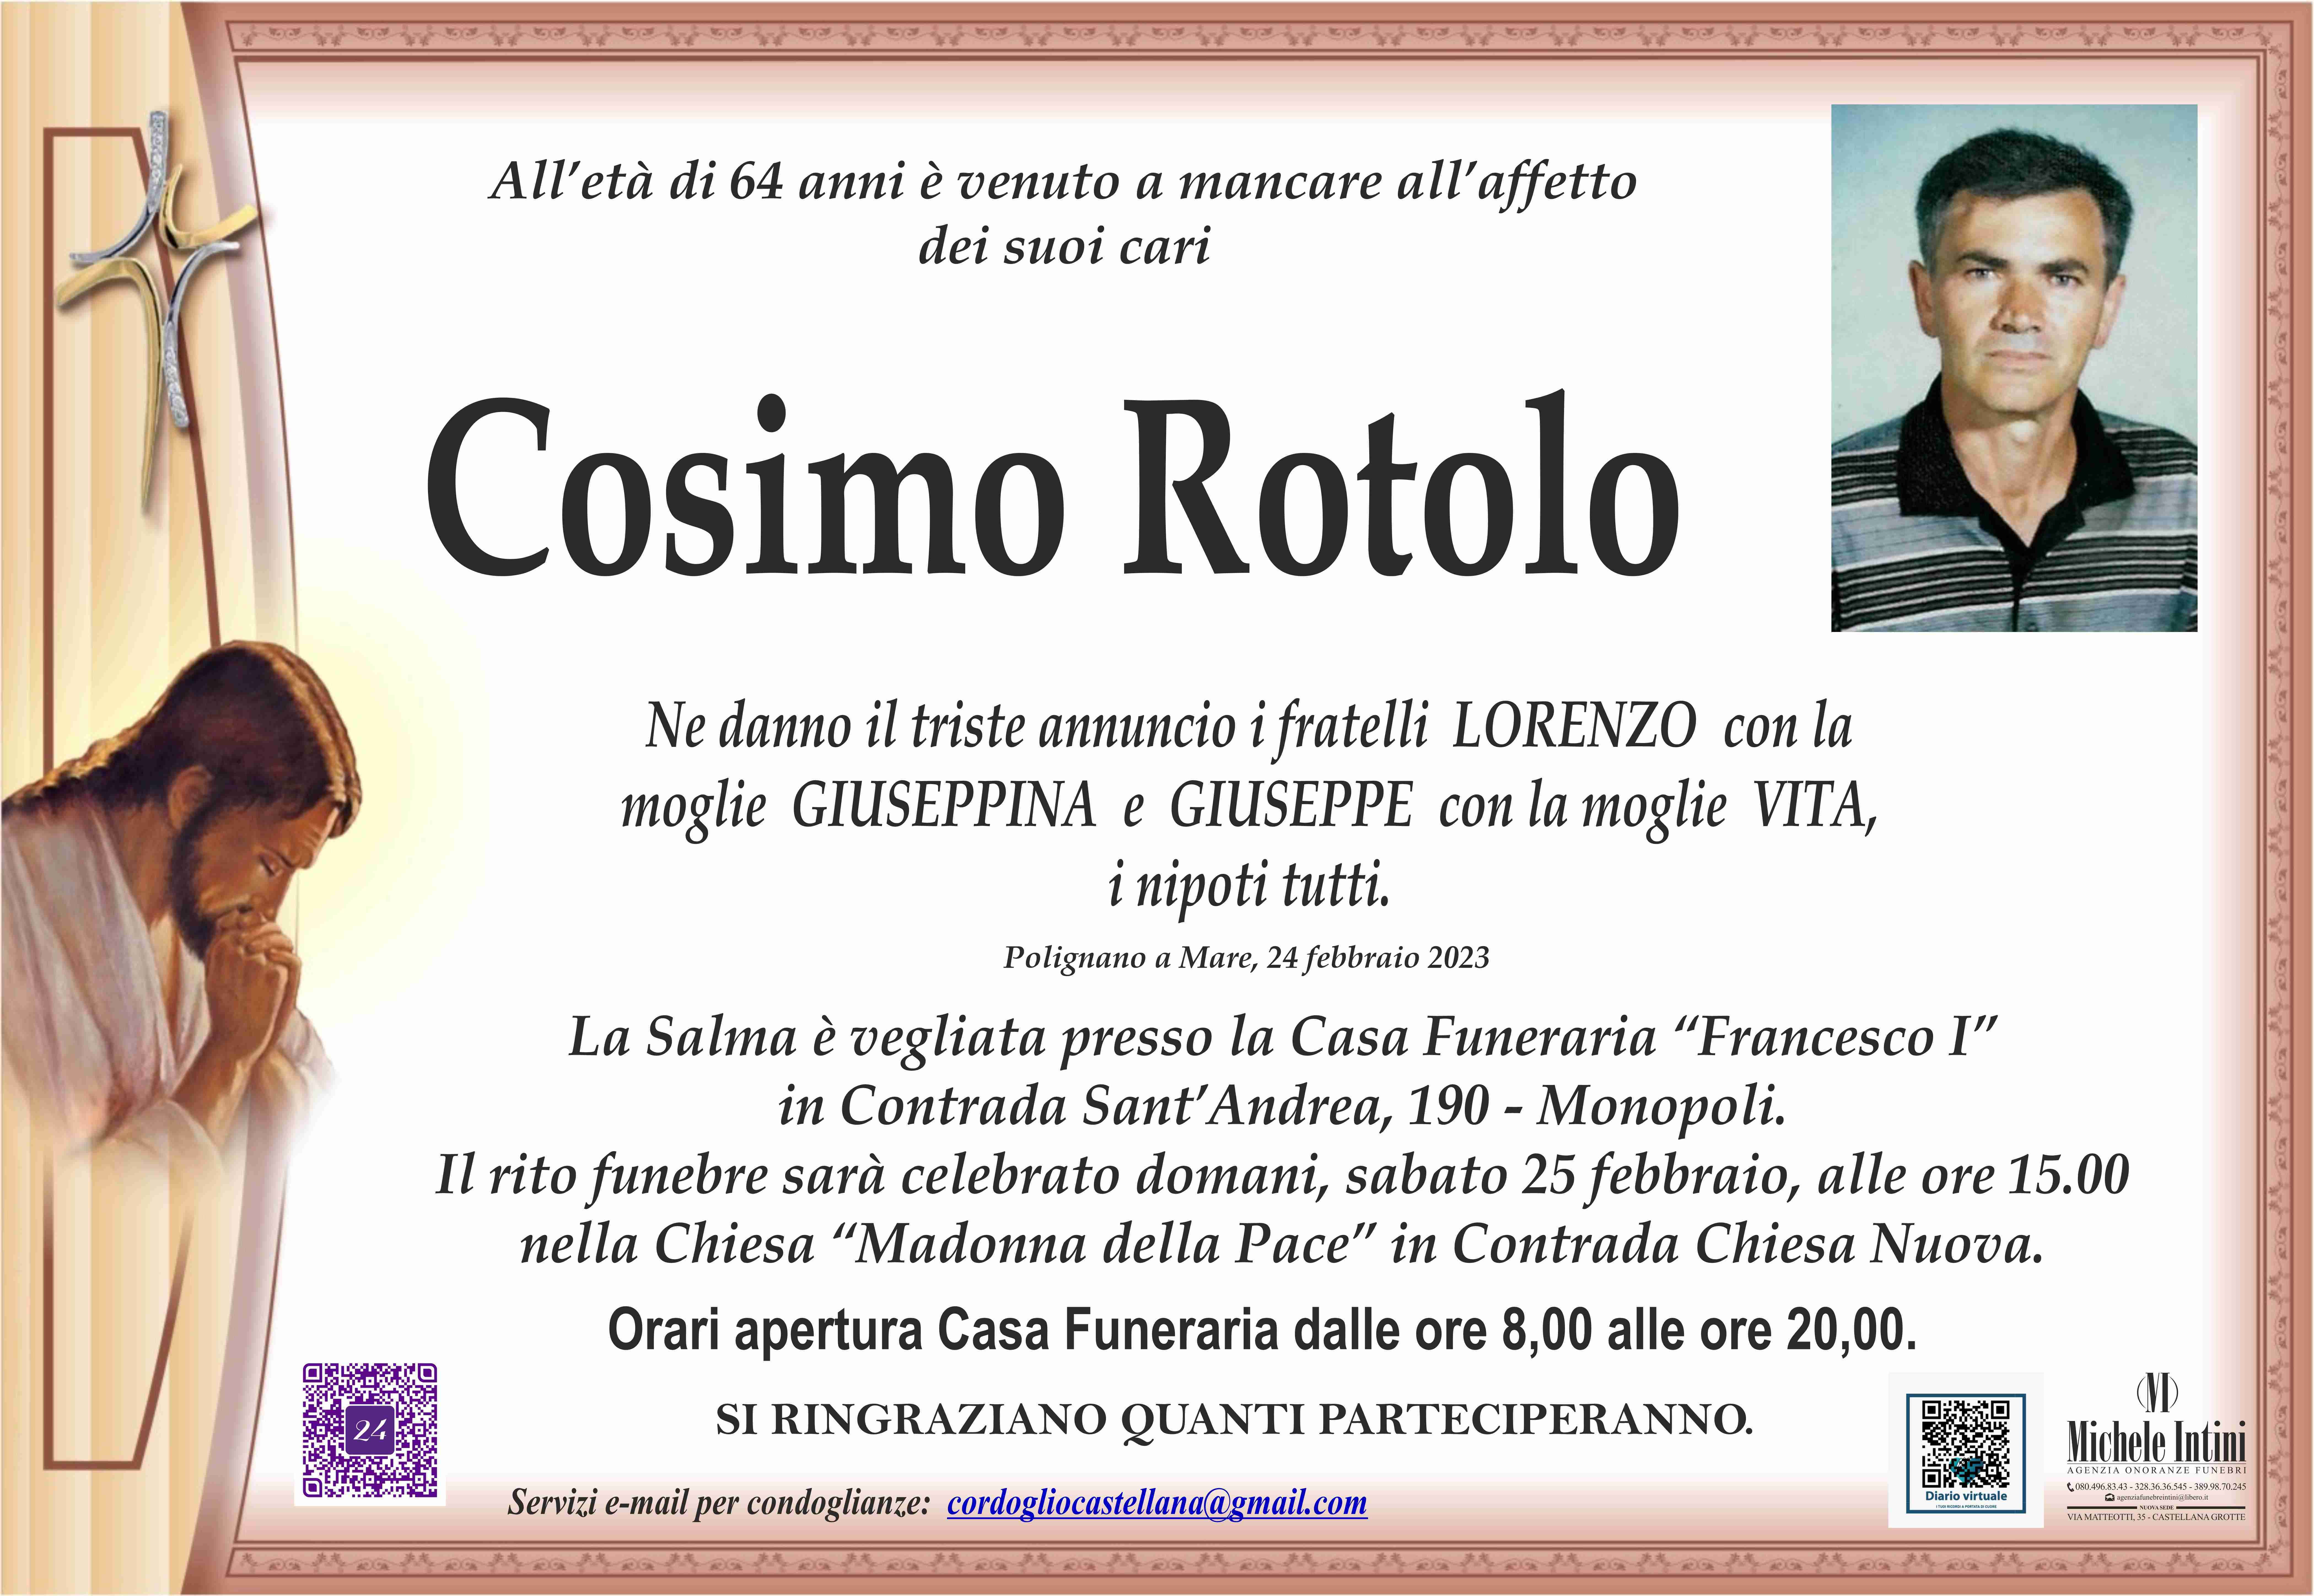 Cosimo Rotolo